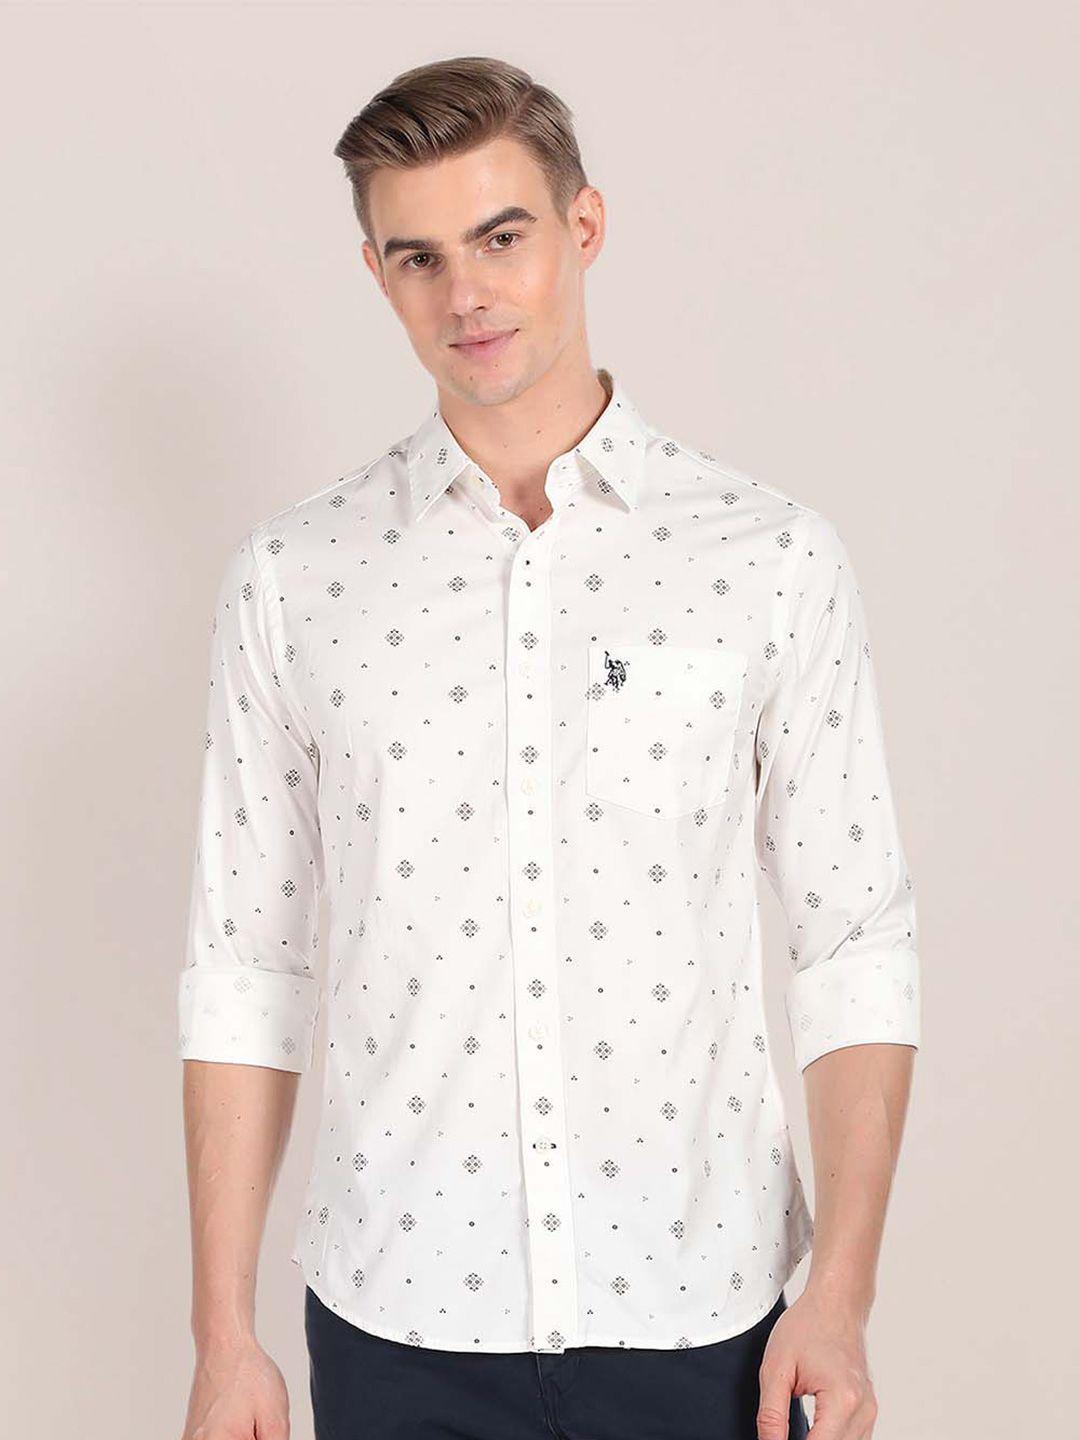 u.s. polo assn. conversational printed pure cotton shirt